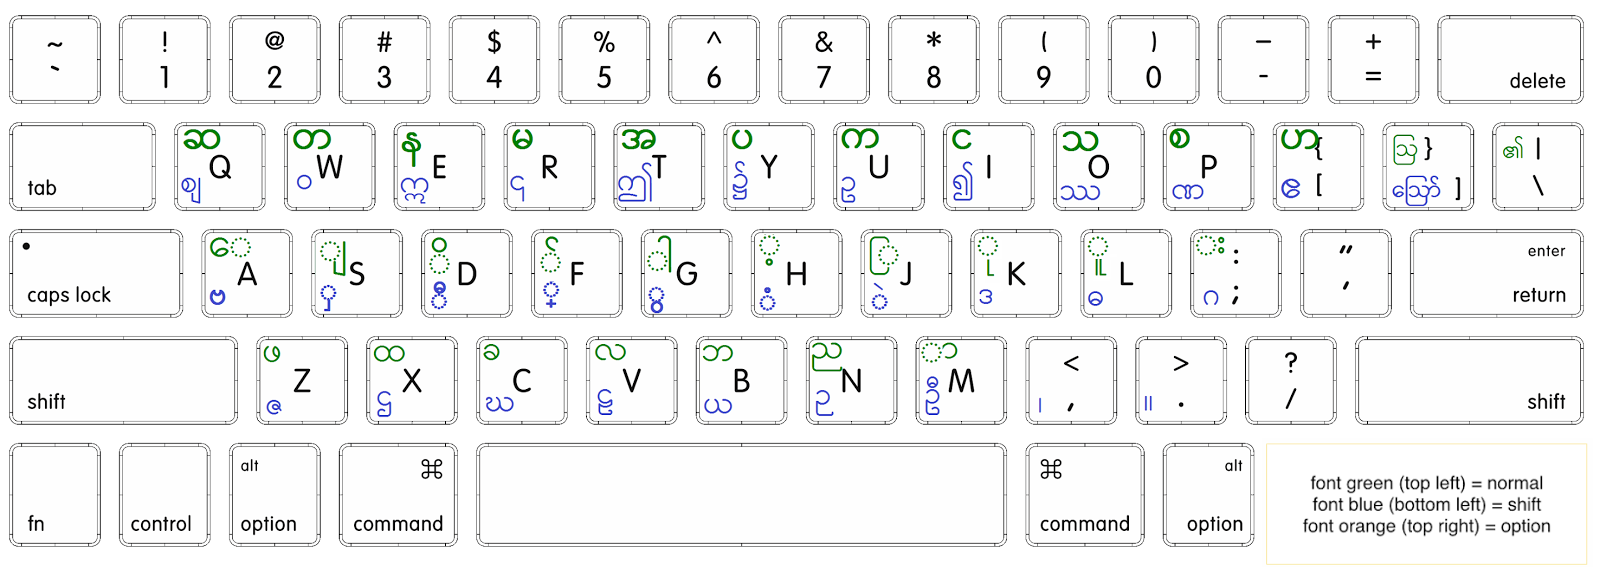 Unicode keyboard free download